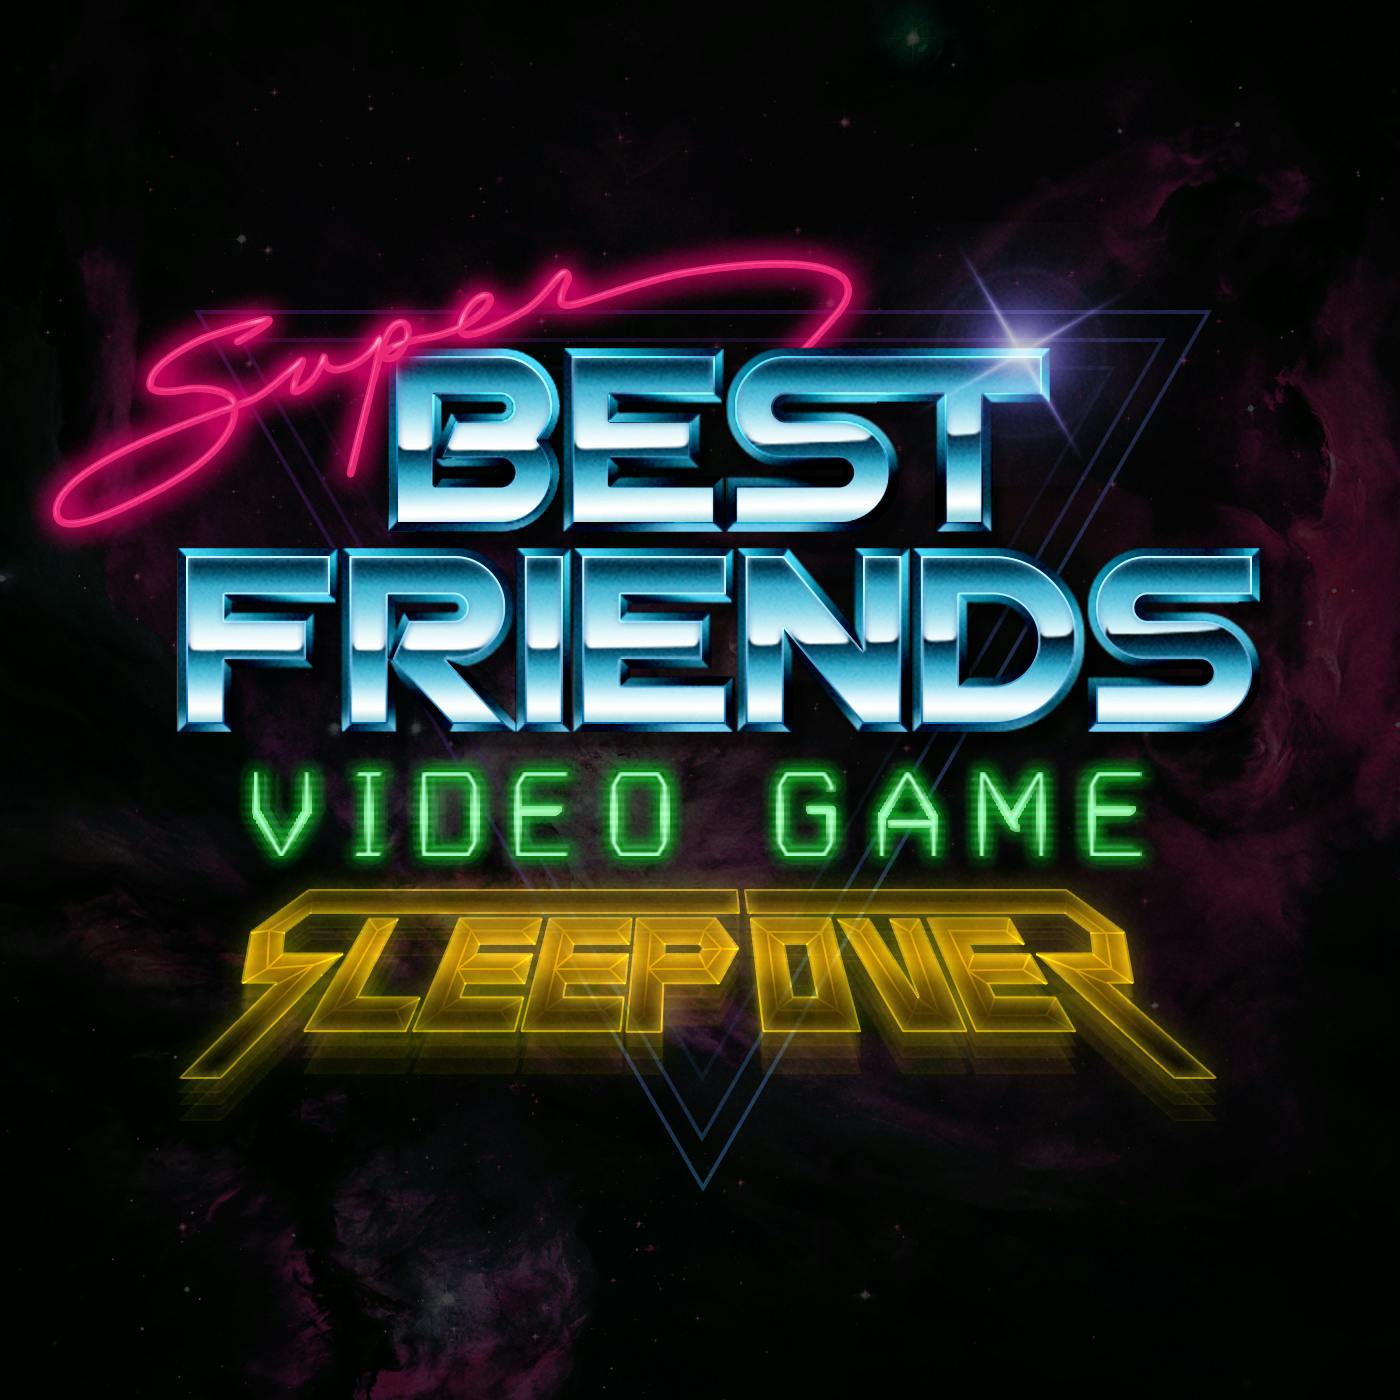 Super Best Friends Video Game Sleepover - Episode 48